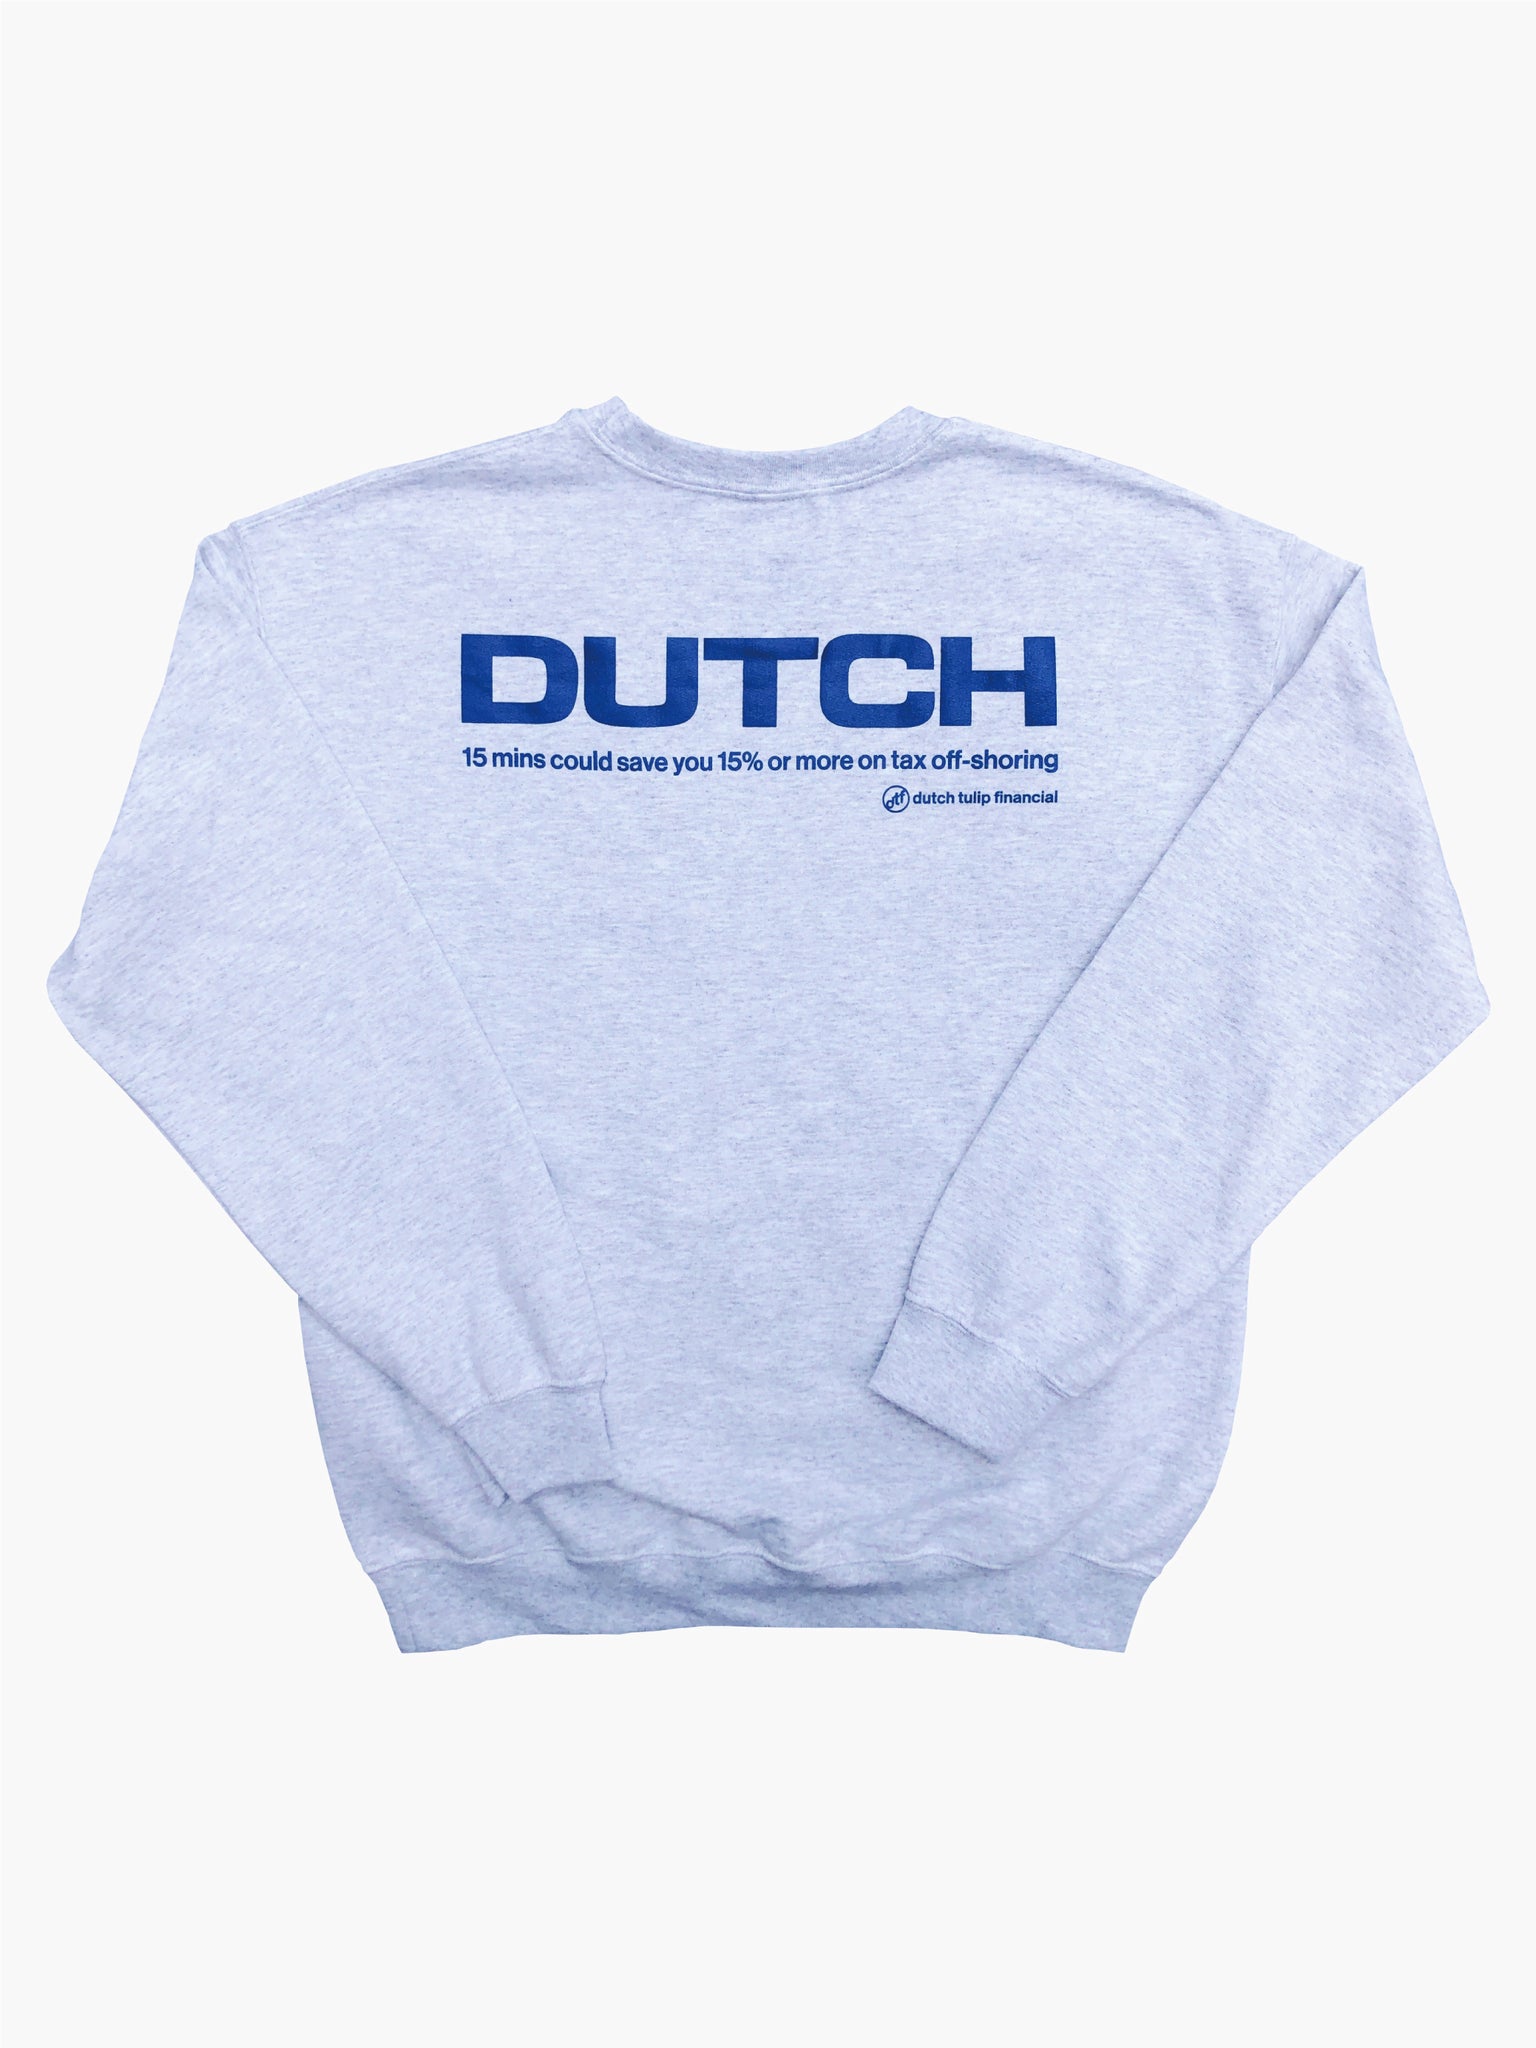 Geico Dutch Sweatshirt - Gray